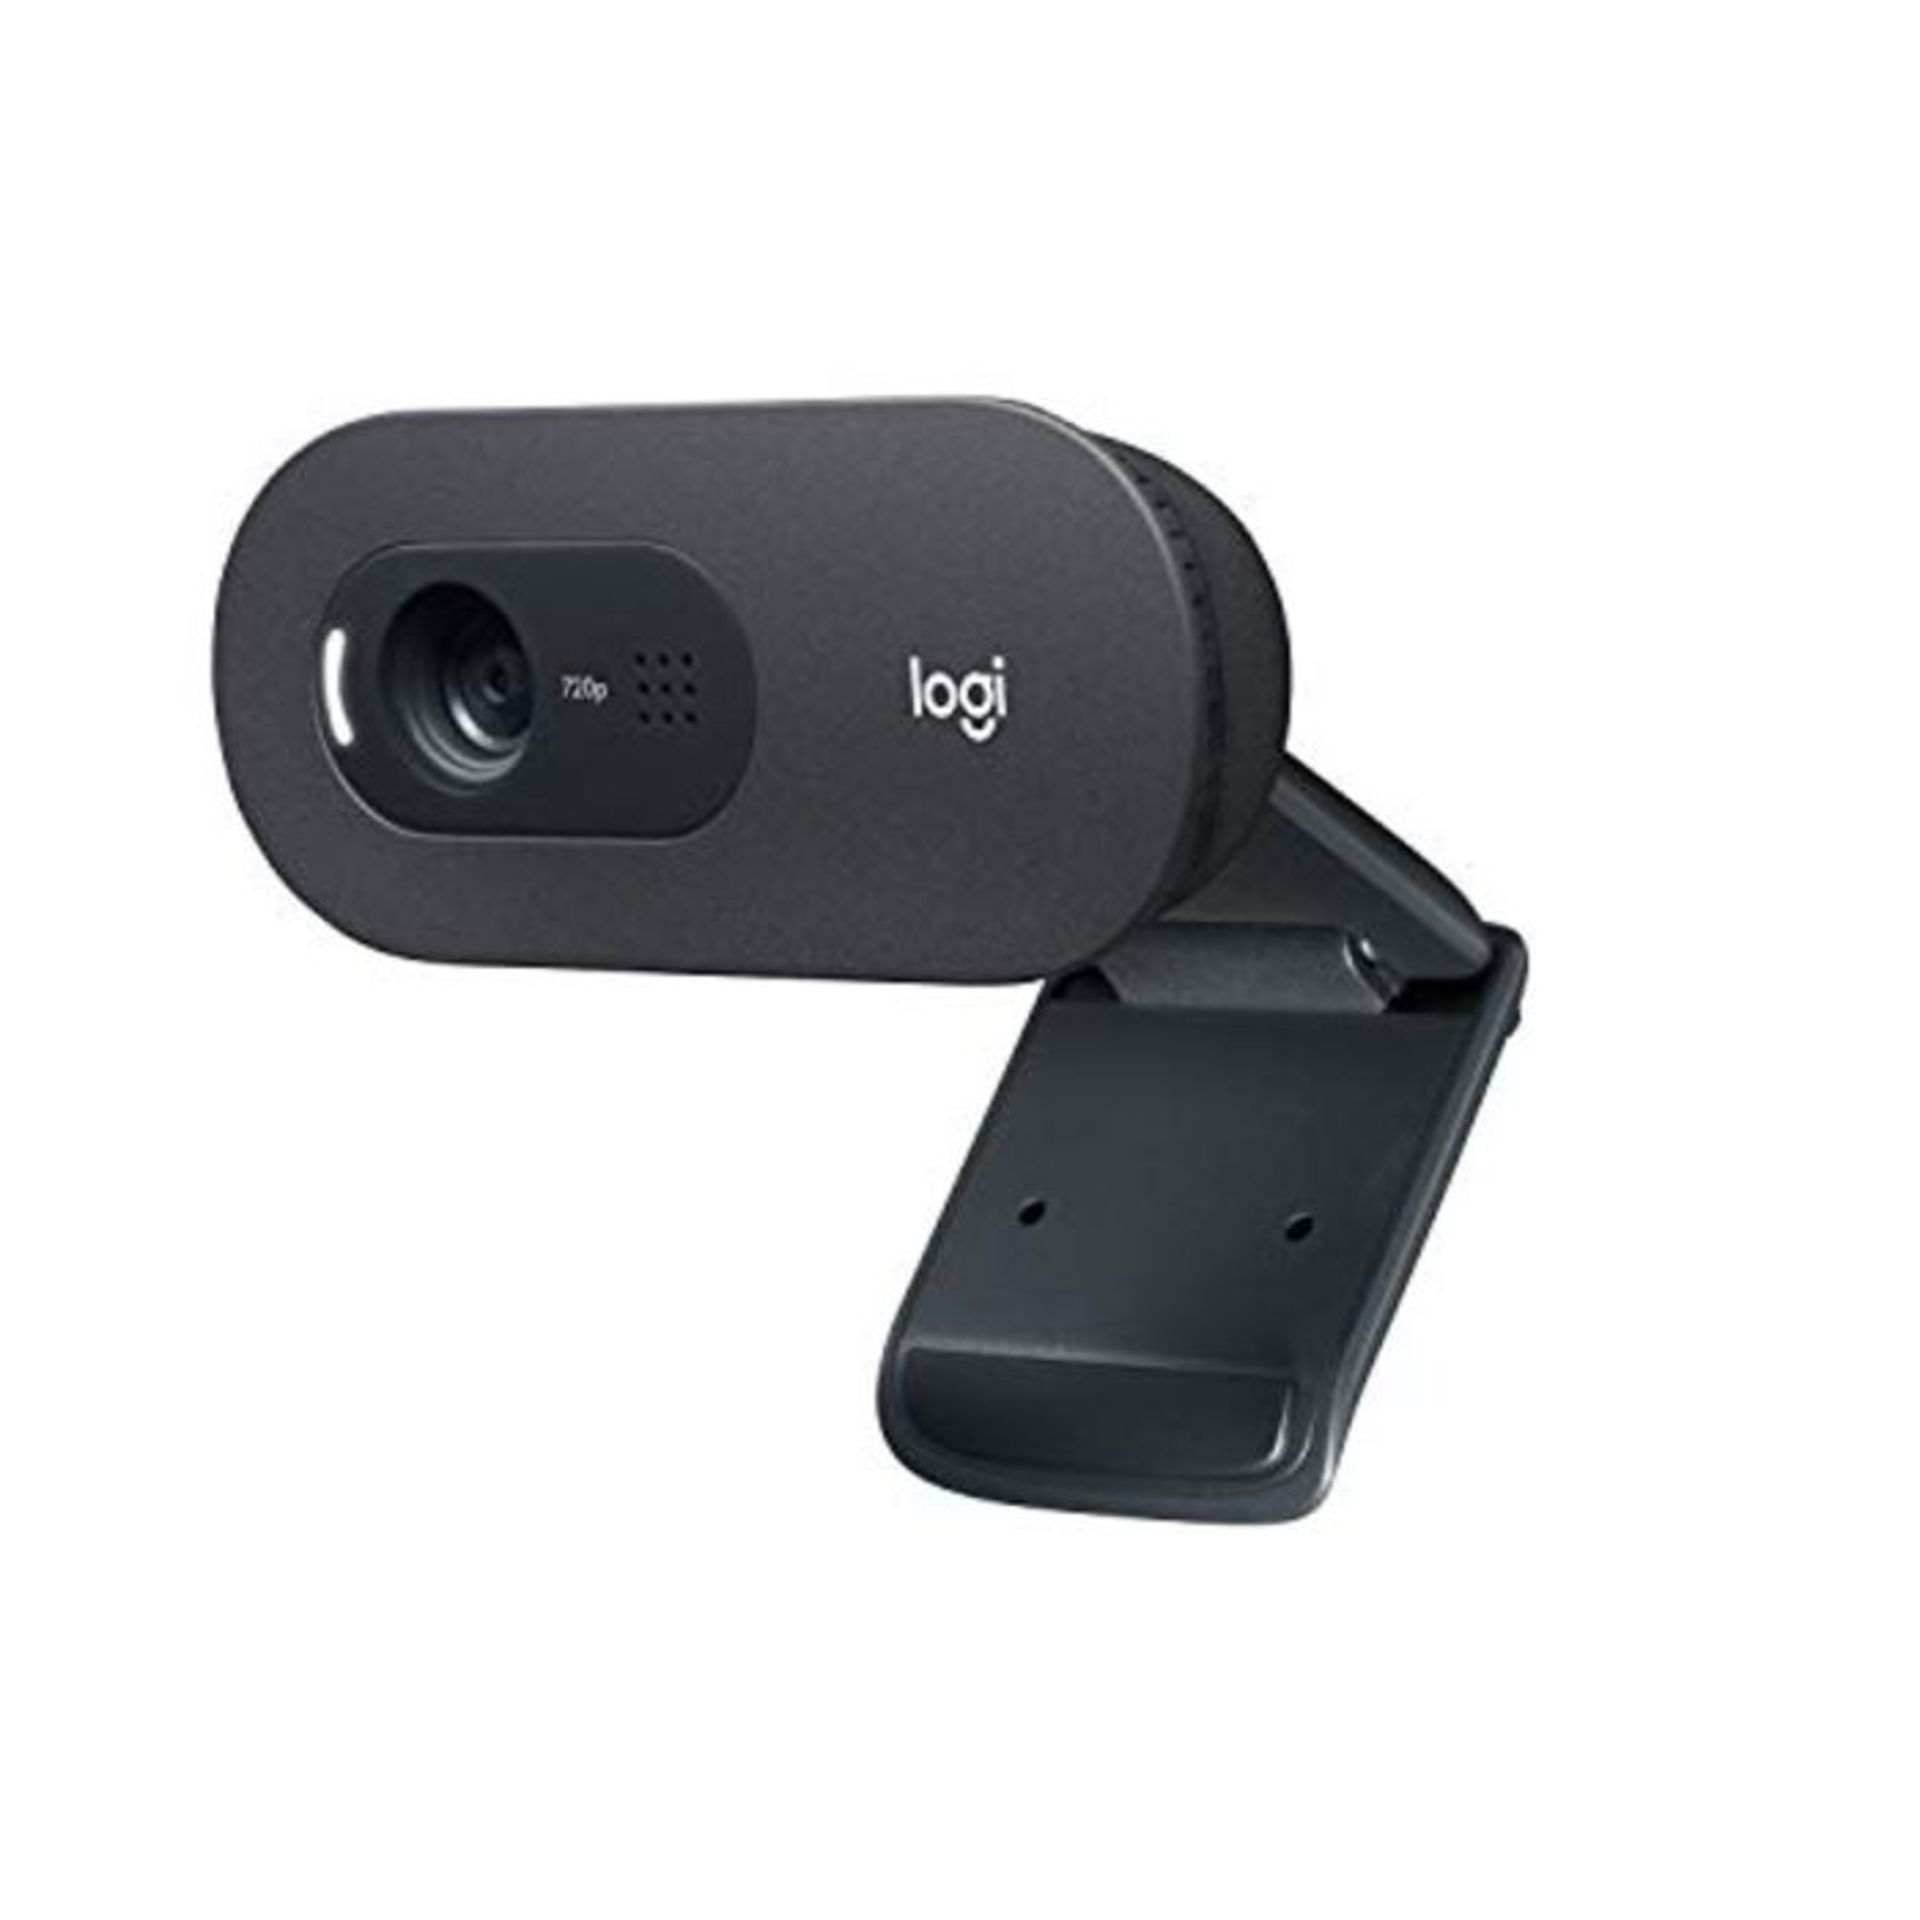 Logitech C505 HD Webcam - 720p HD External USB Camera for Desktop or Laptop with Long-